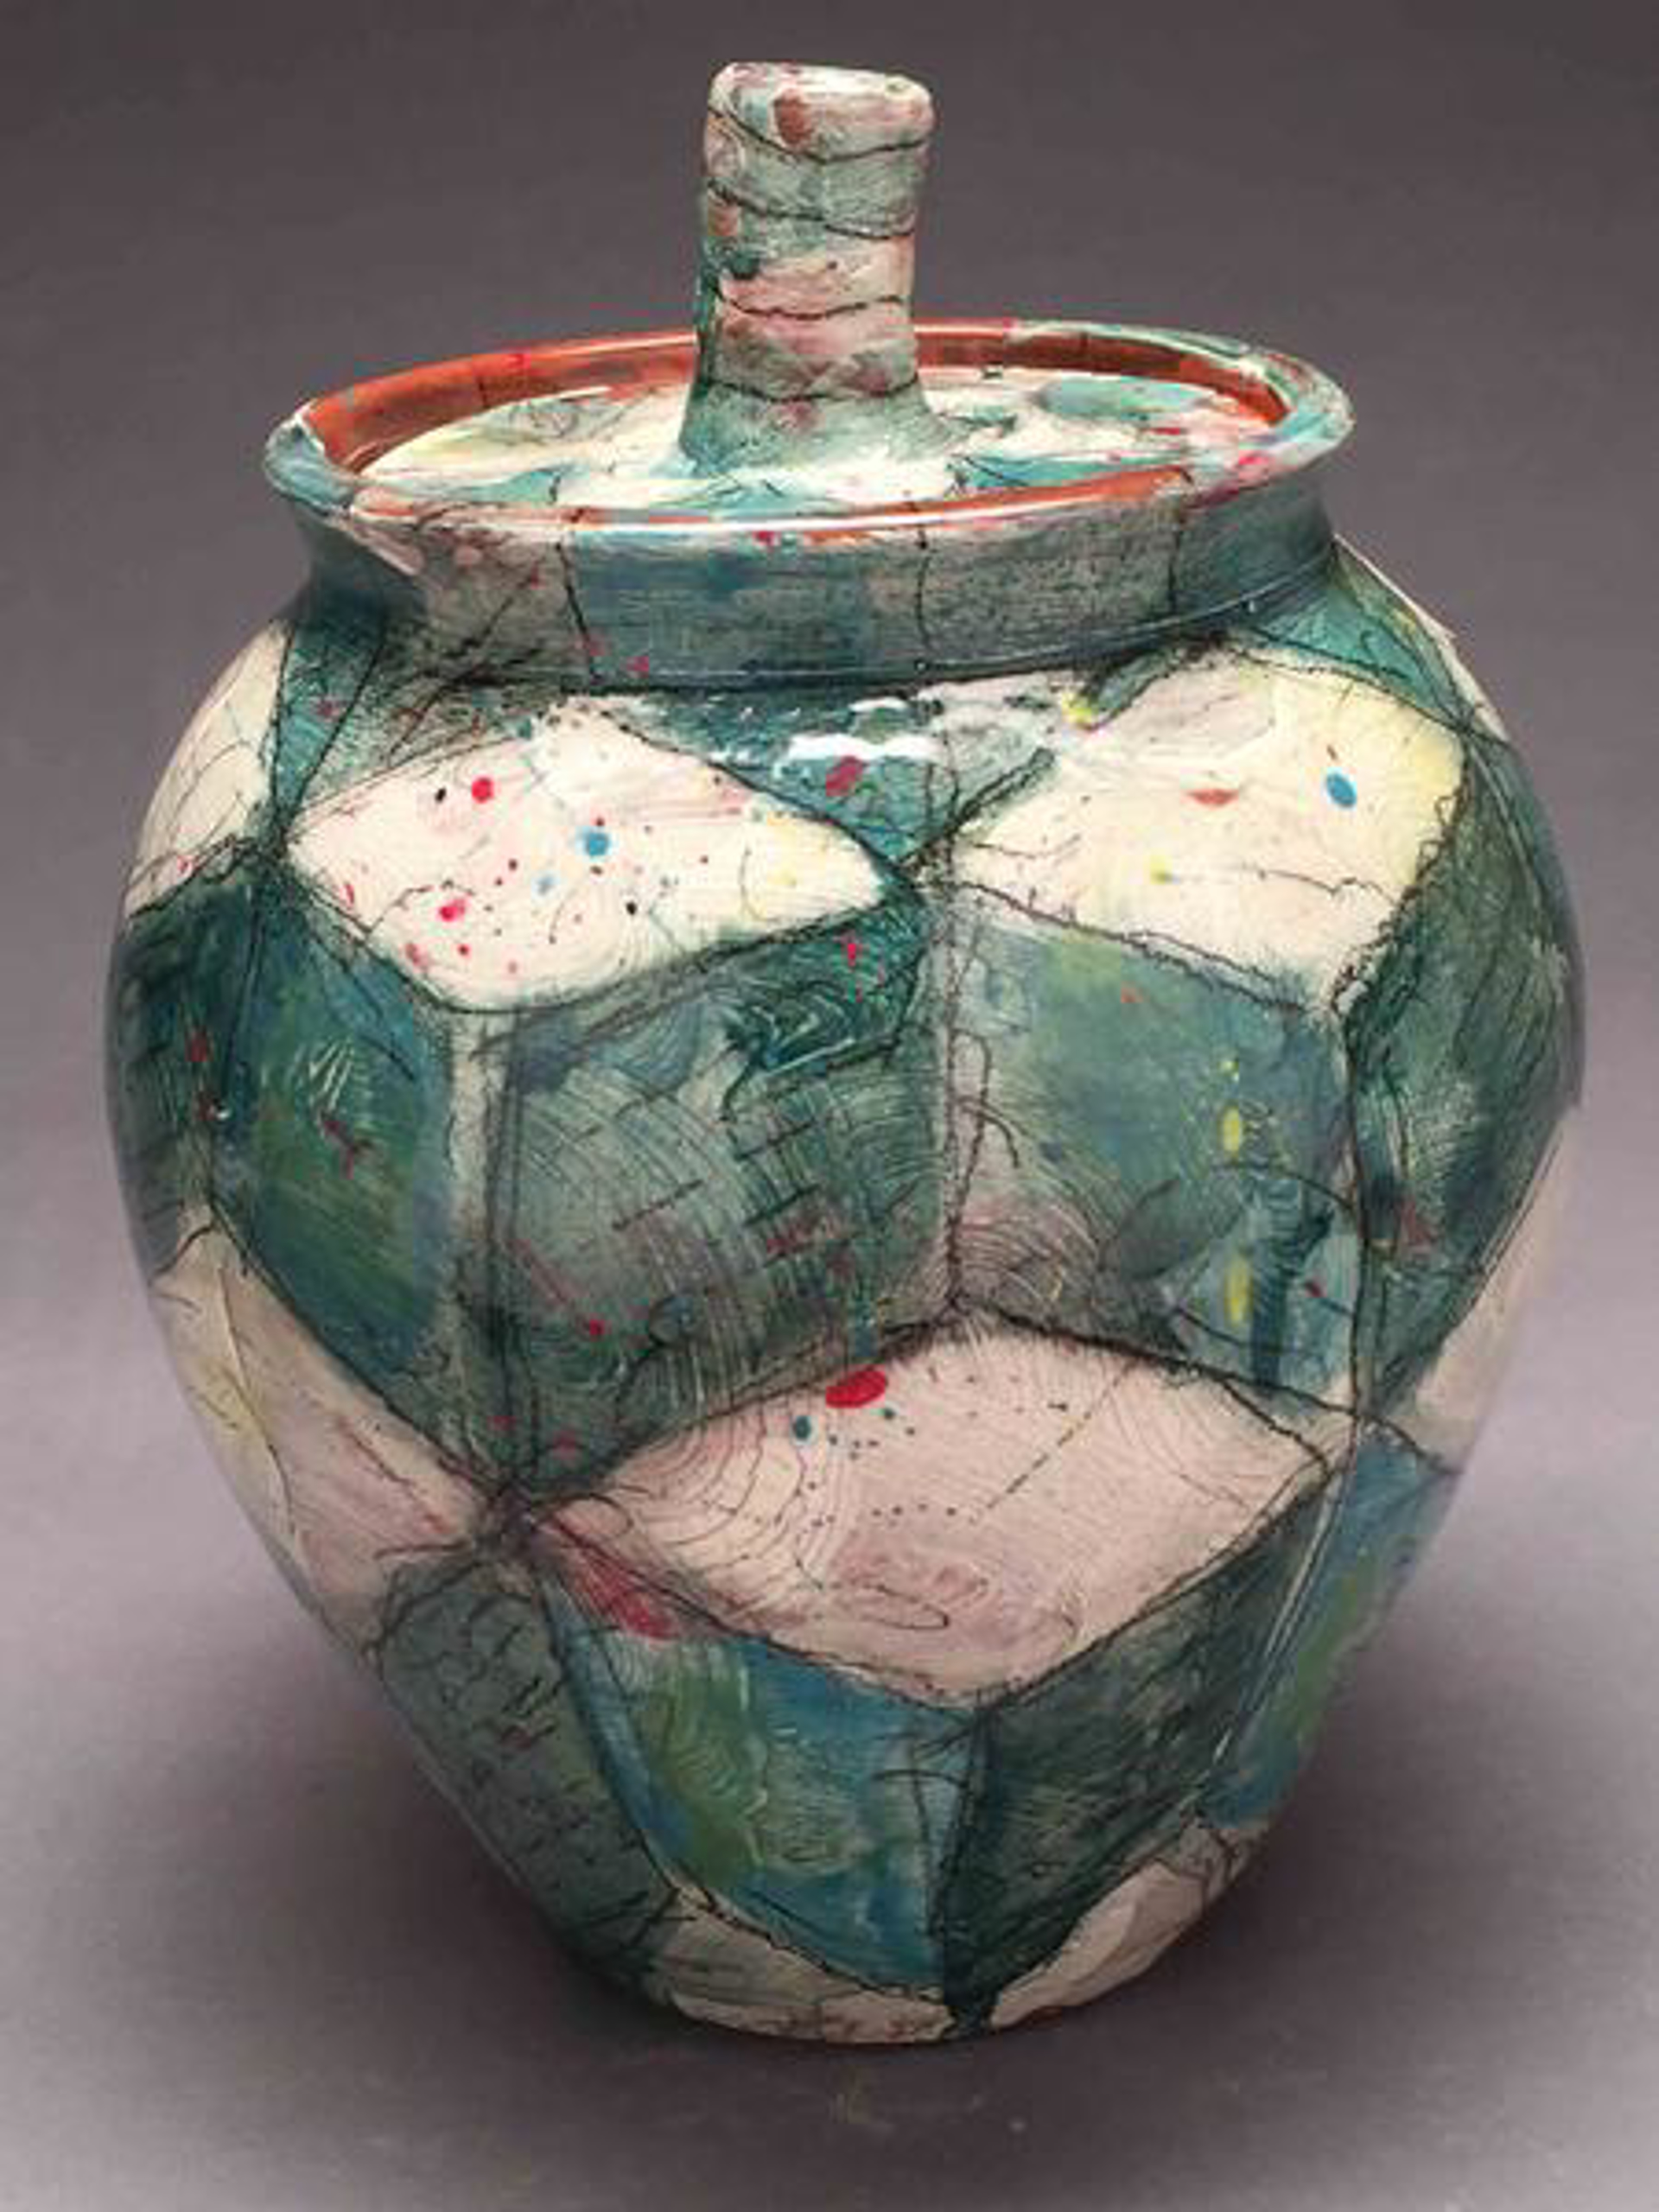 Tumbling Blocks Jar by Susan McGilvrey